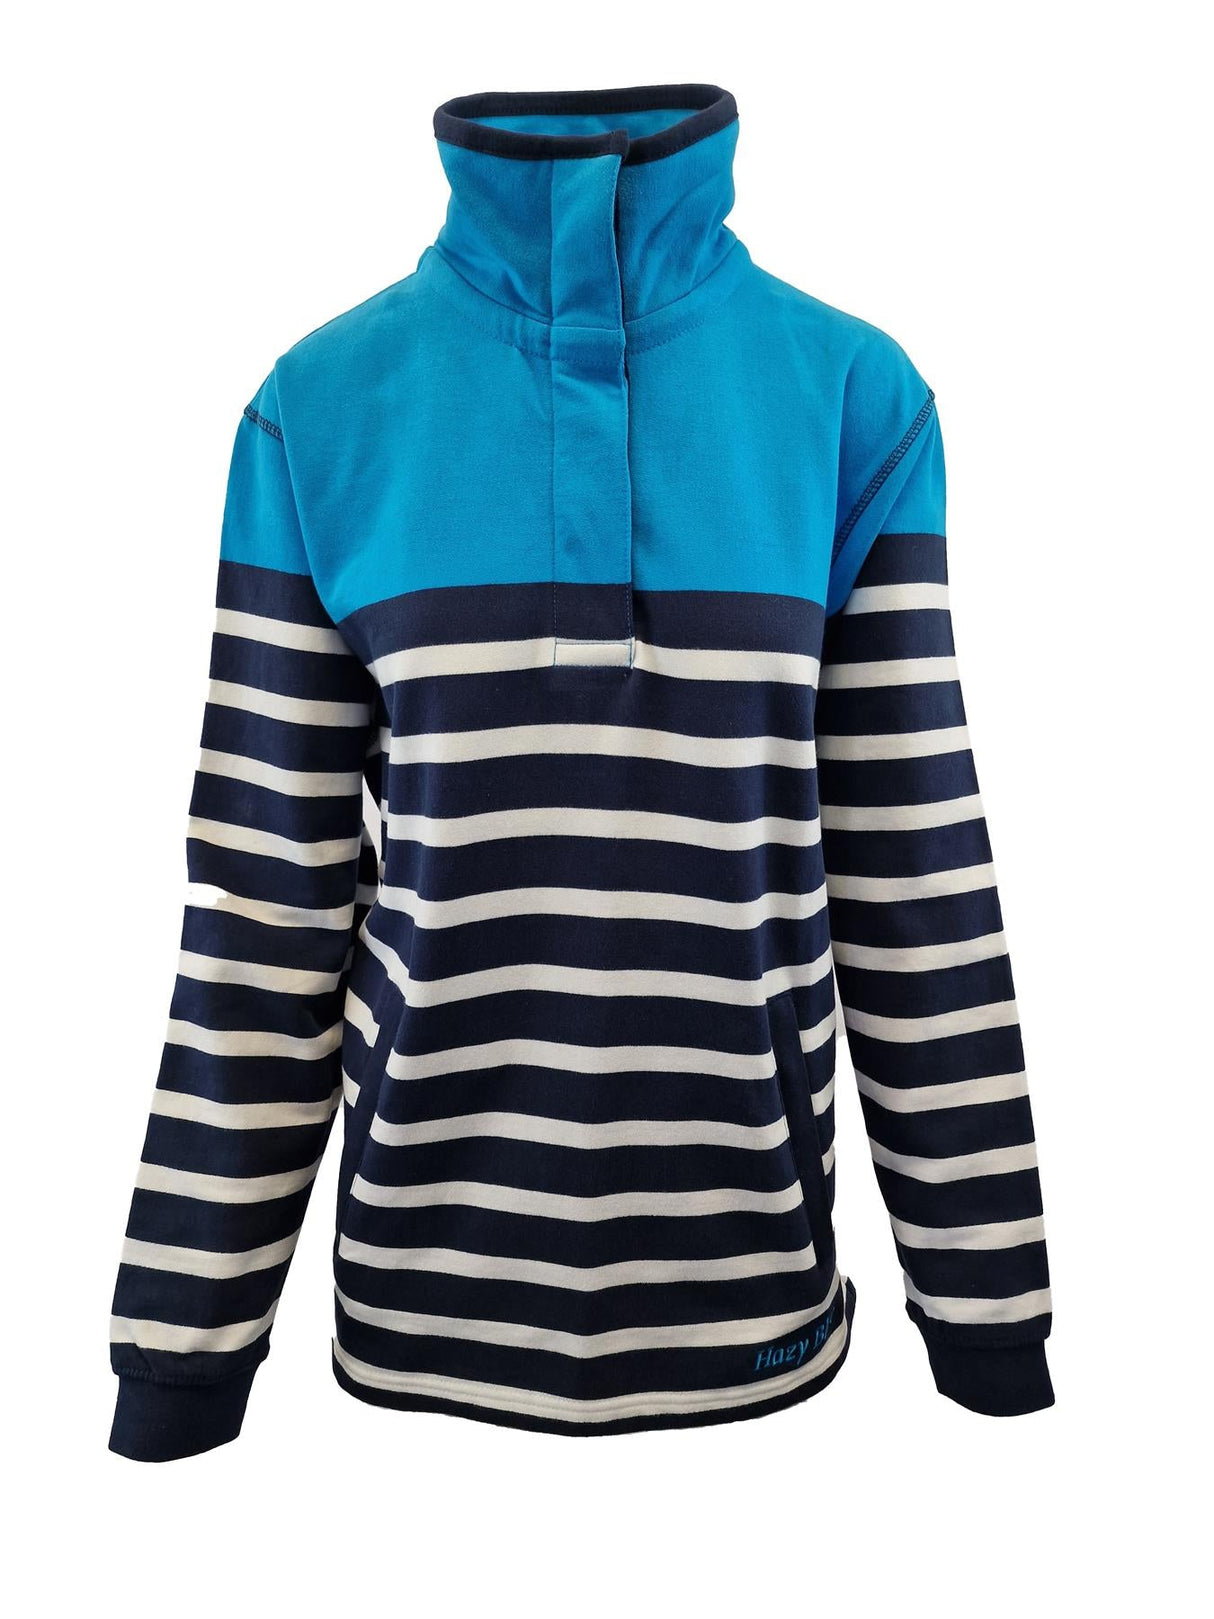 Hazy Blue Tasha Womens Pullover Sweatshirt - Premium clothing from Hazy Blue - Just $29.99! Shop now at Warwickshire Clothing